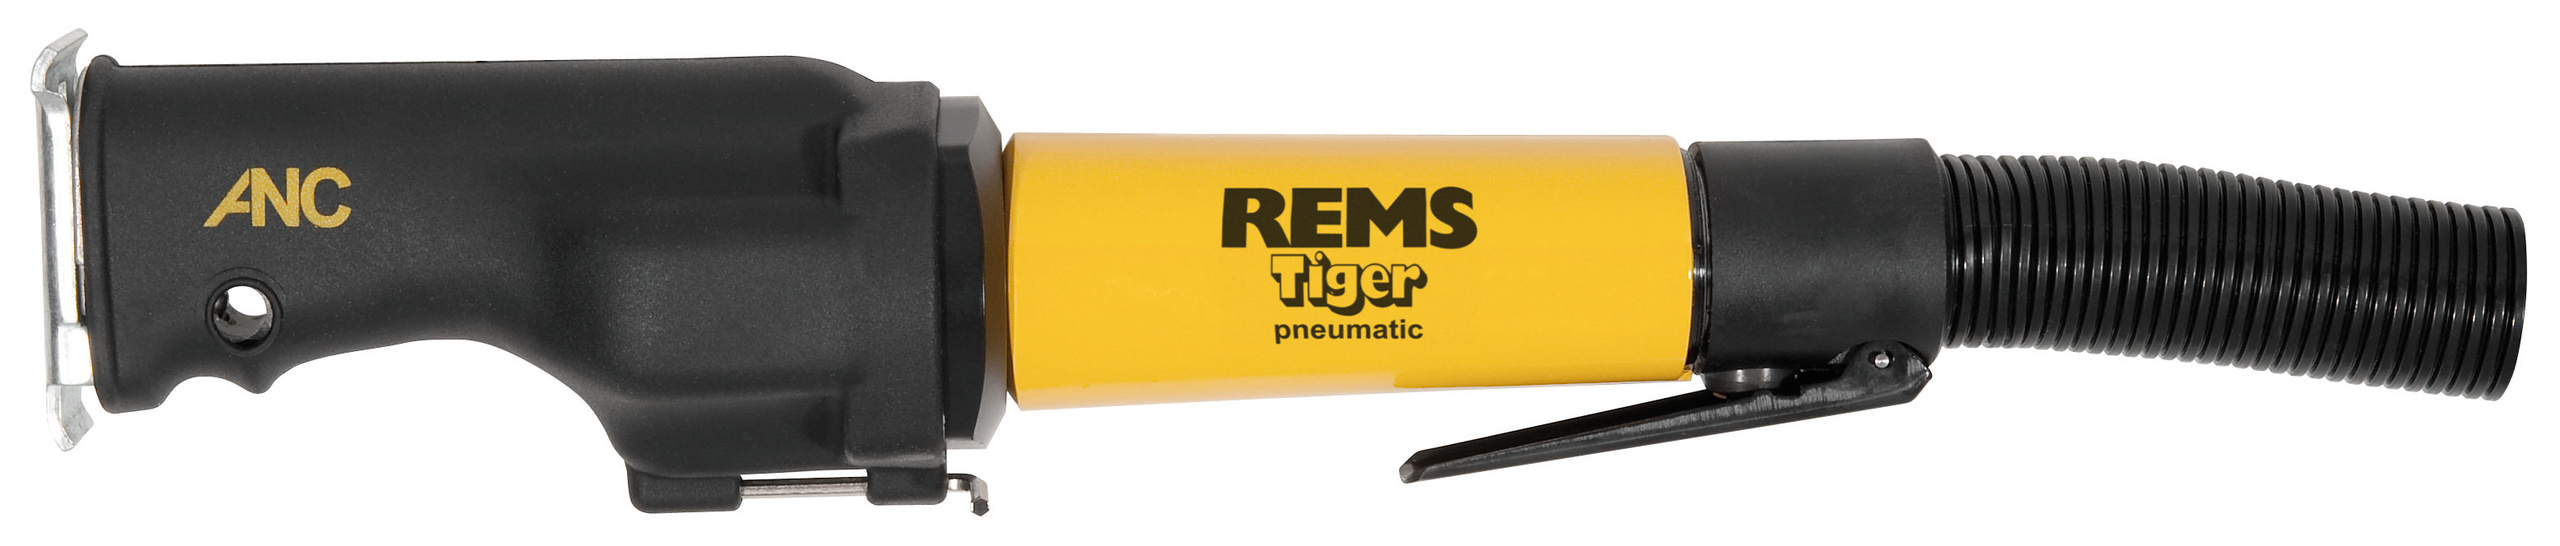 <br/>REMS Tiger pneumatic m. entr.